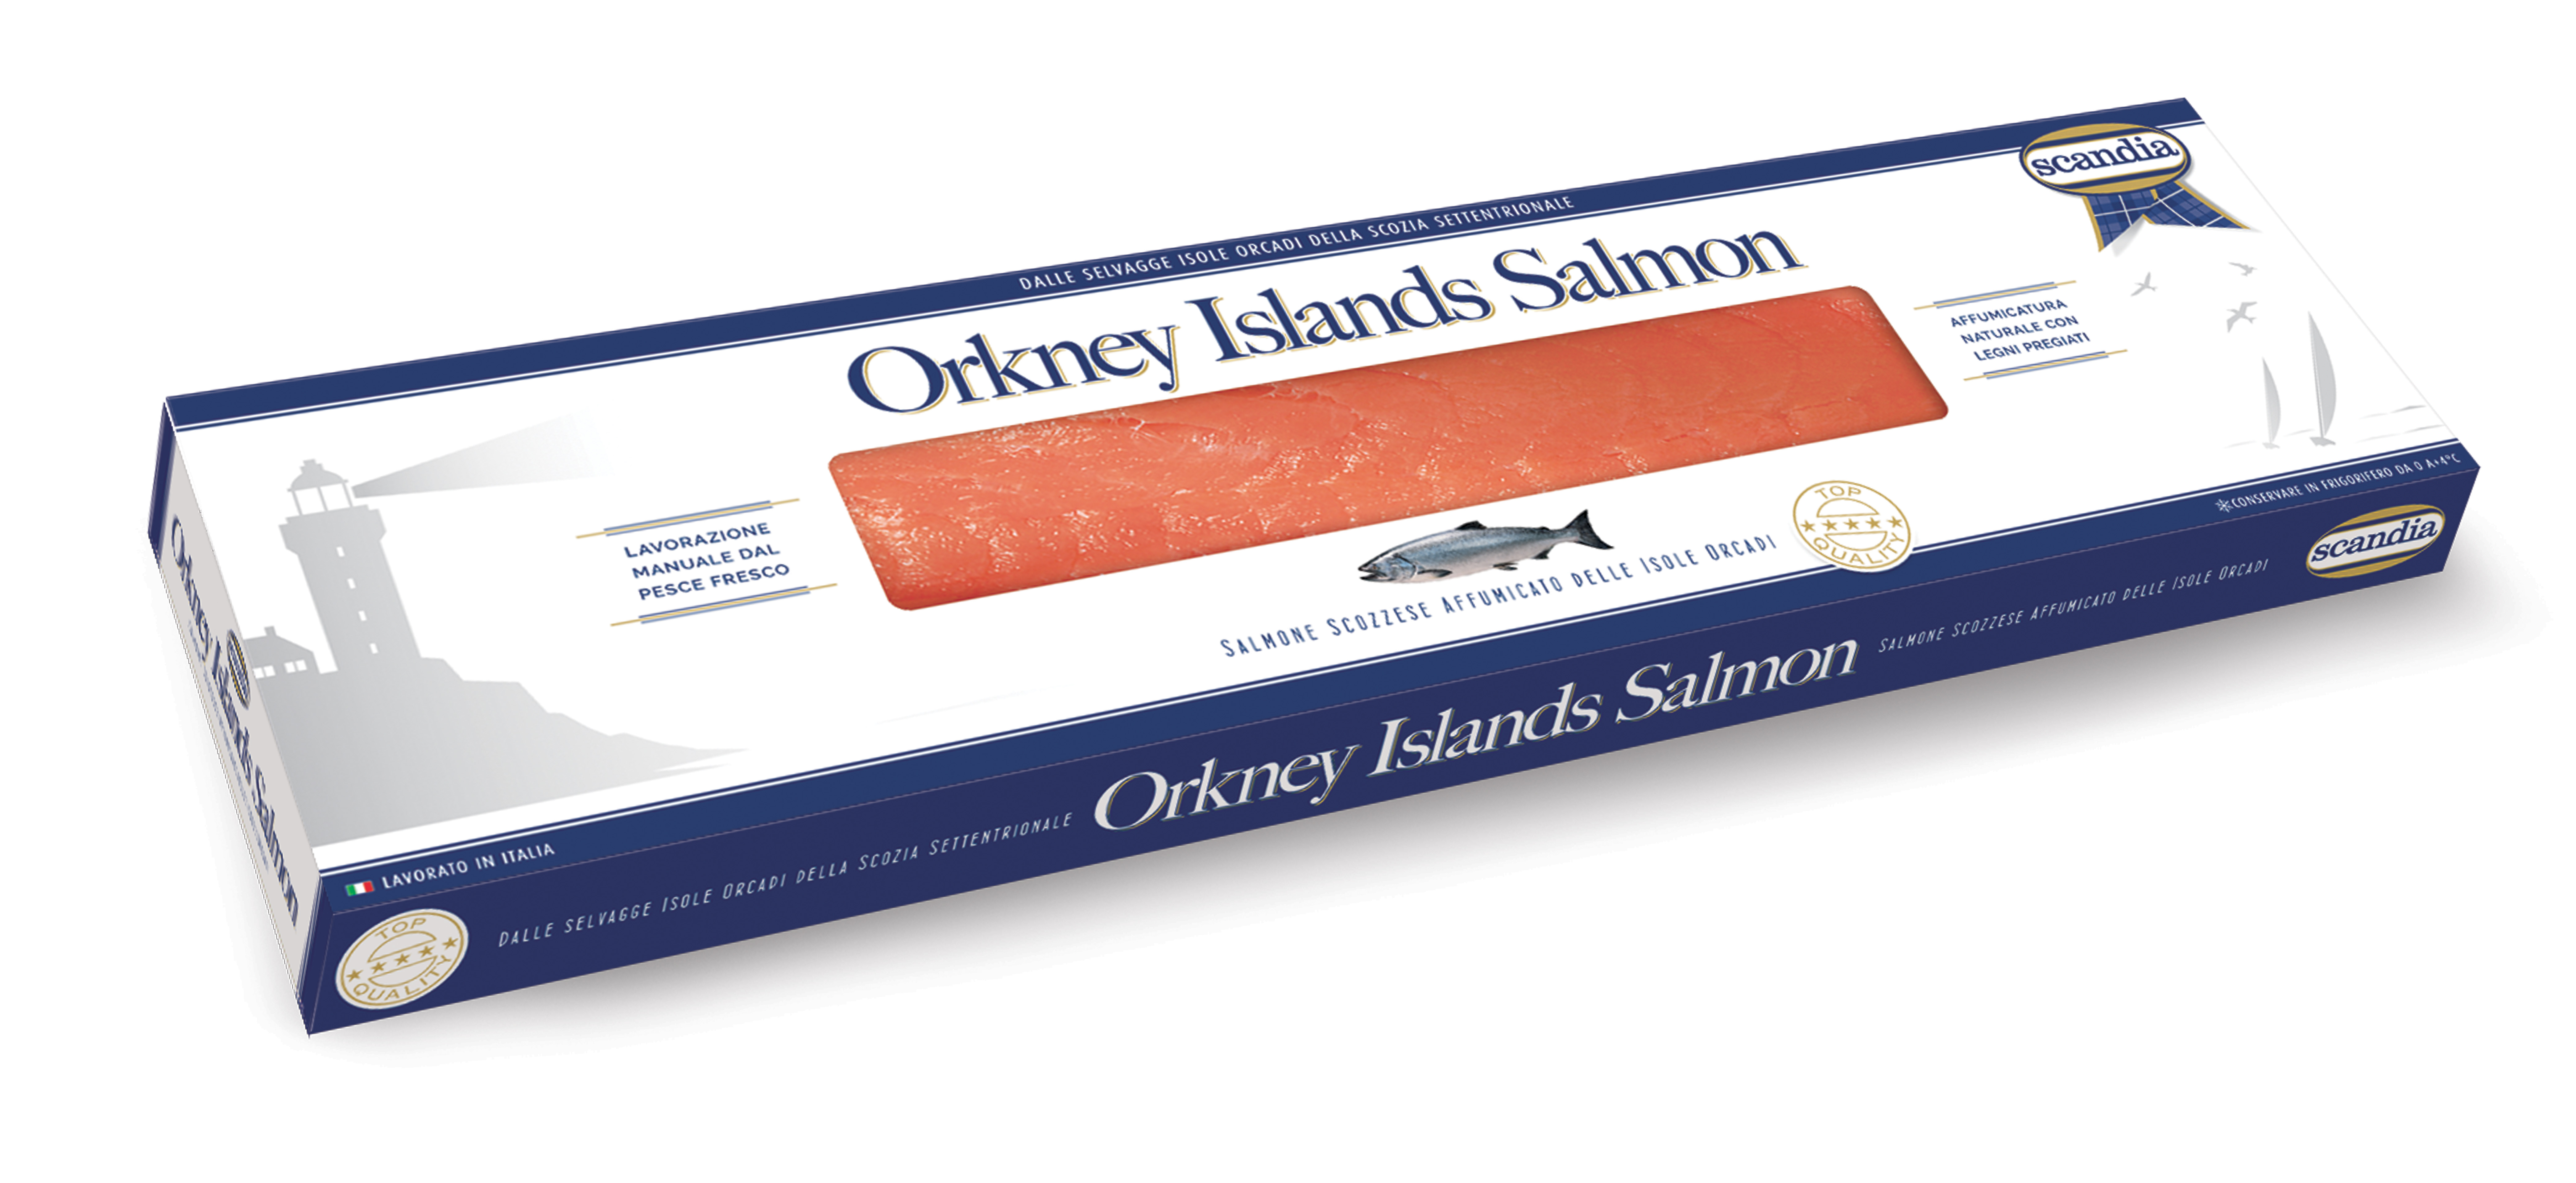 Orkney Islands Salmon - Loin PREMIUM fetta lunga